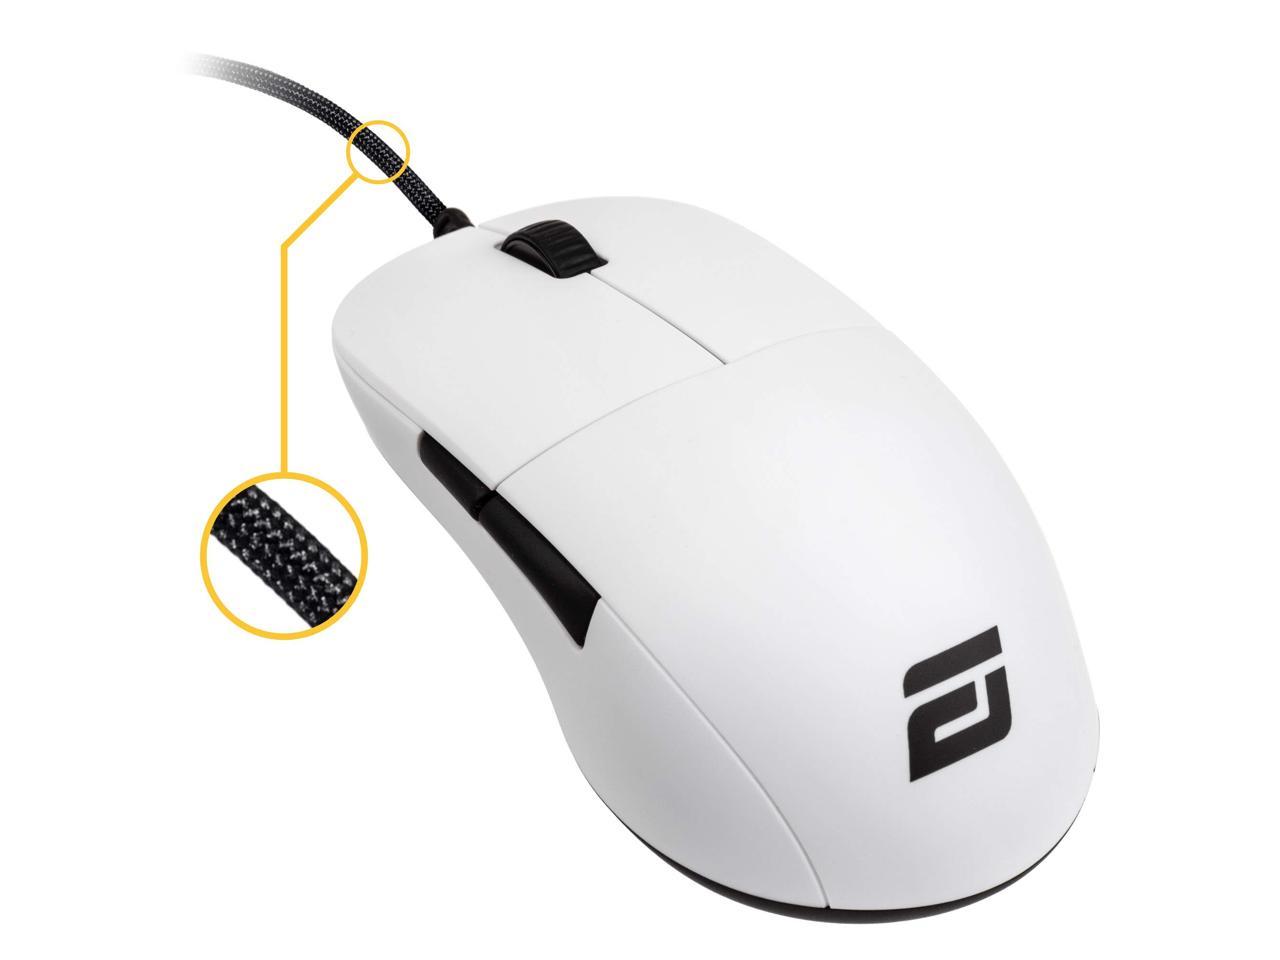 Endgame Gear Xm1 Gaming Mouse White Newegg Com